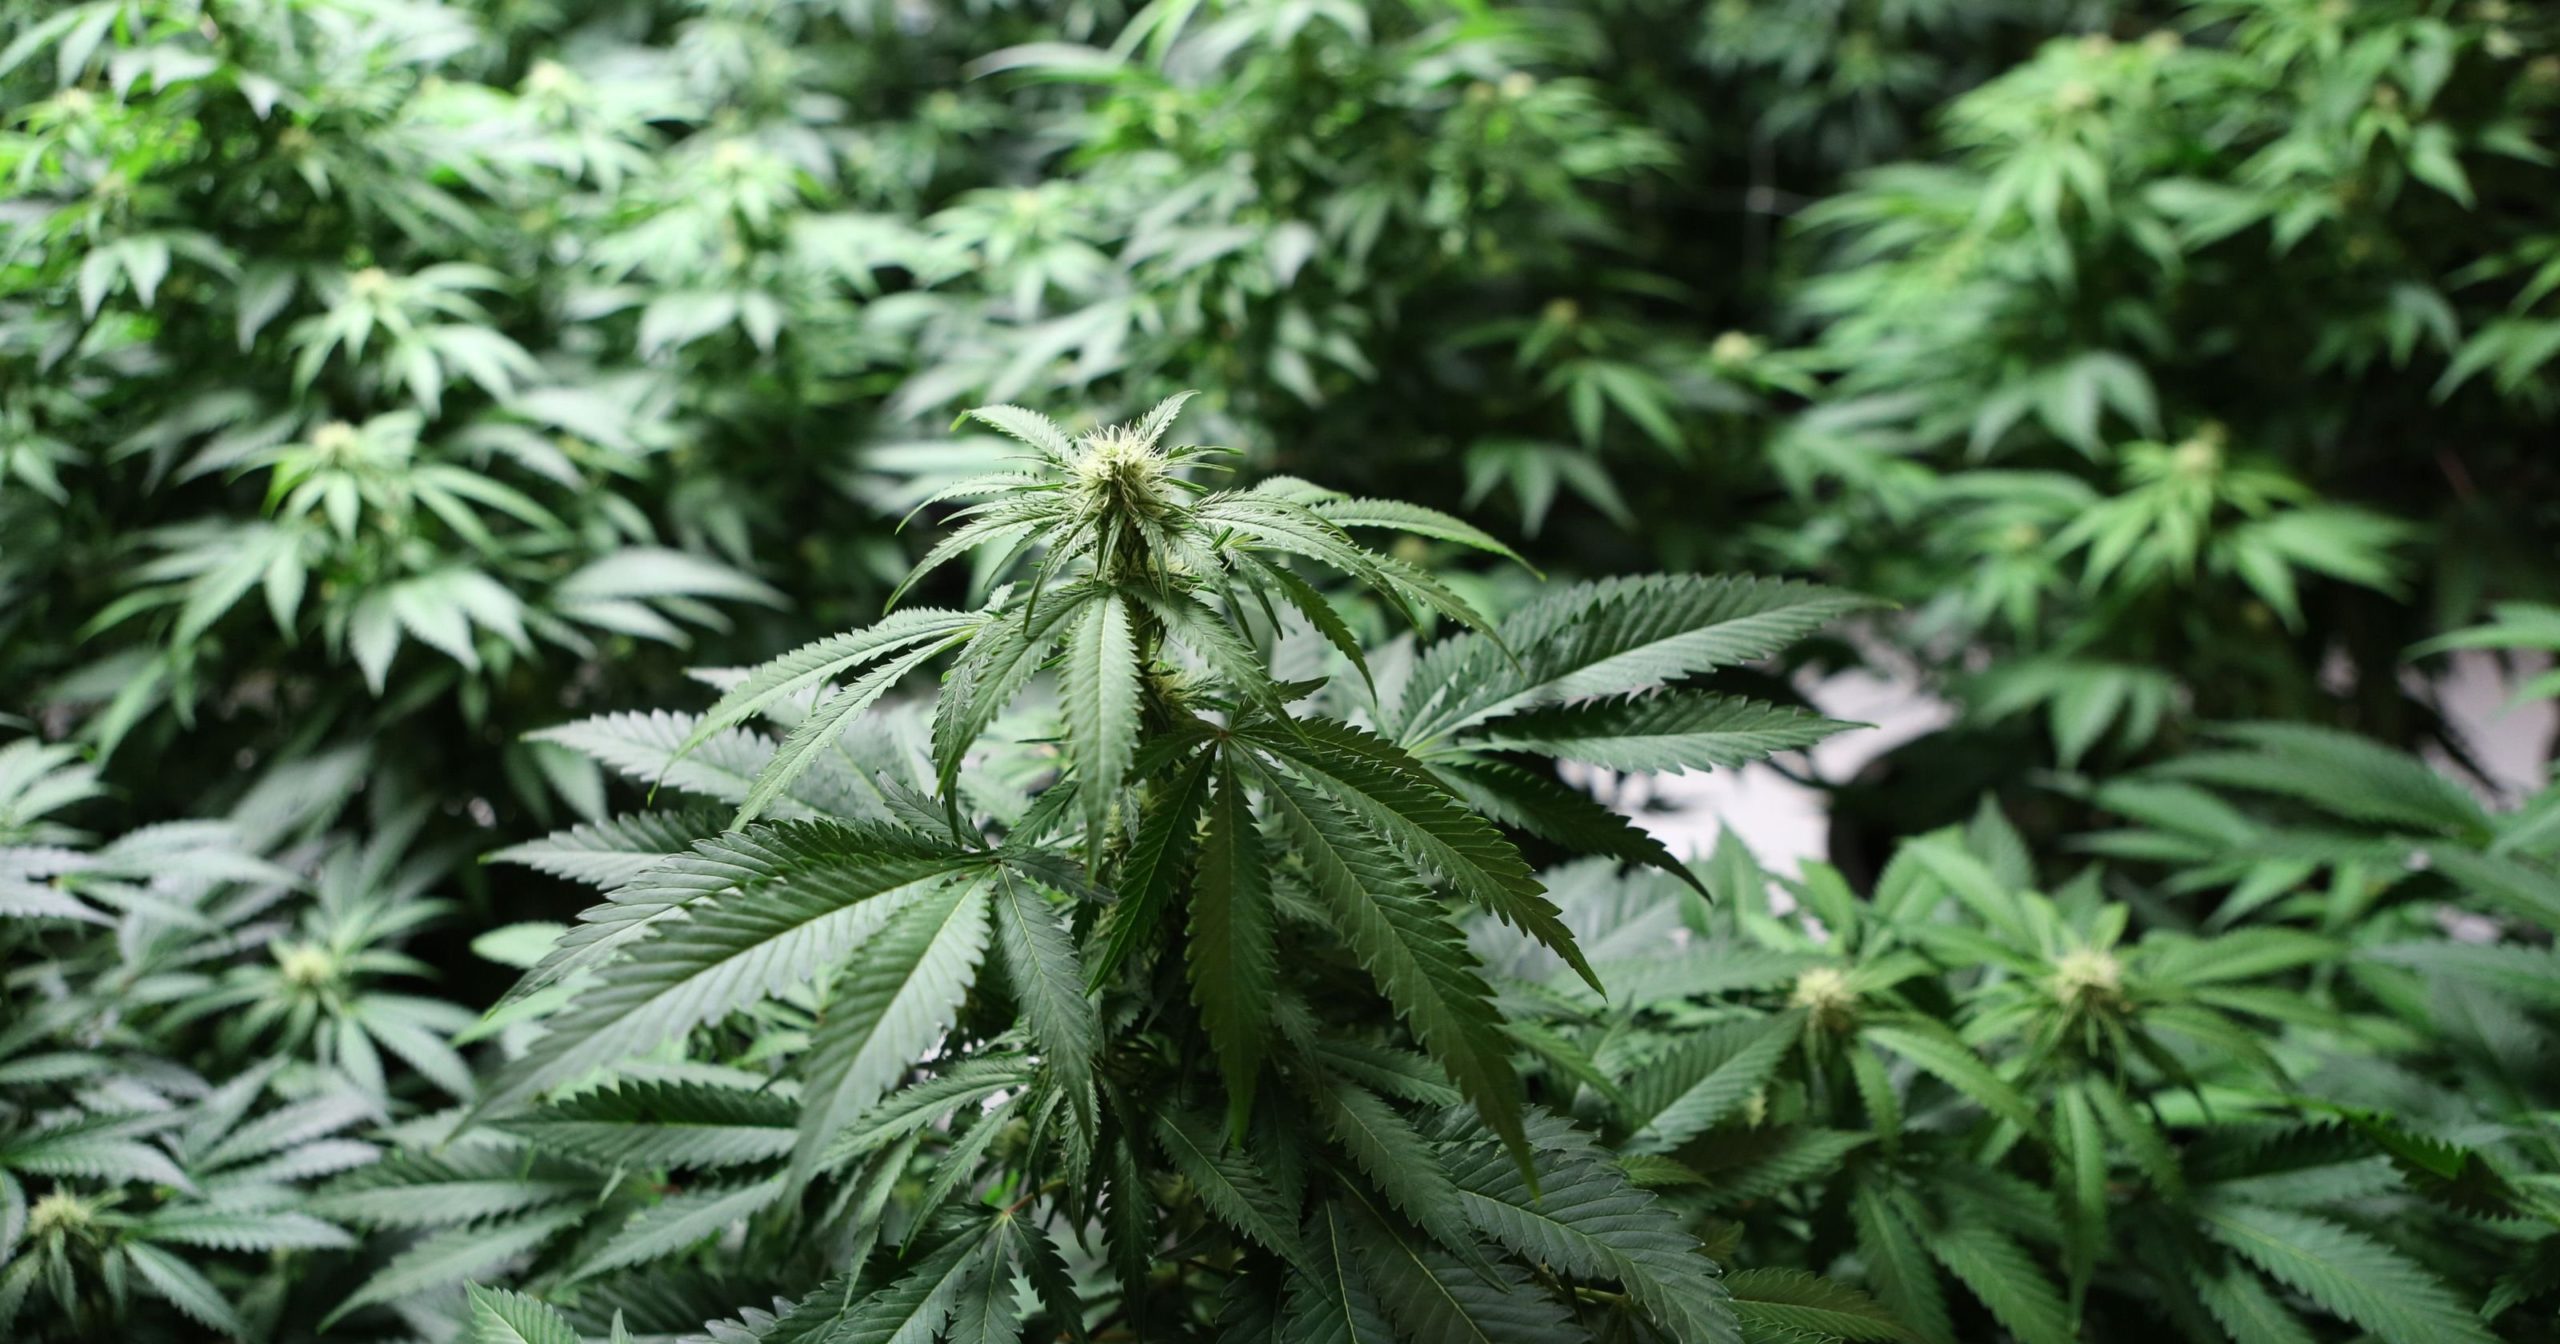 New York marijuana legalization gets boost as Democrats win state Senate control